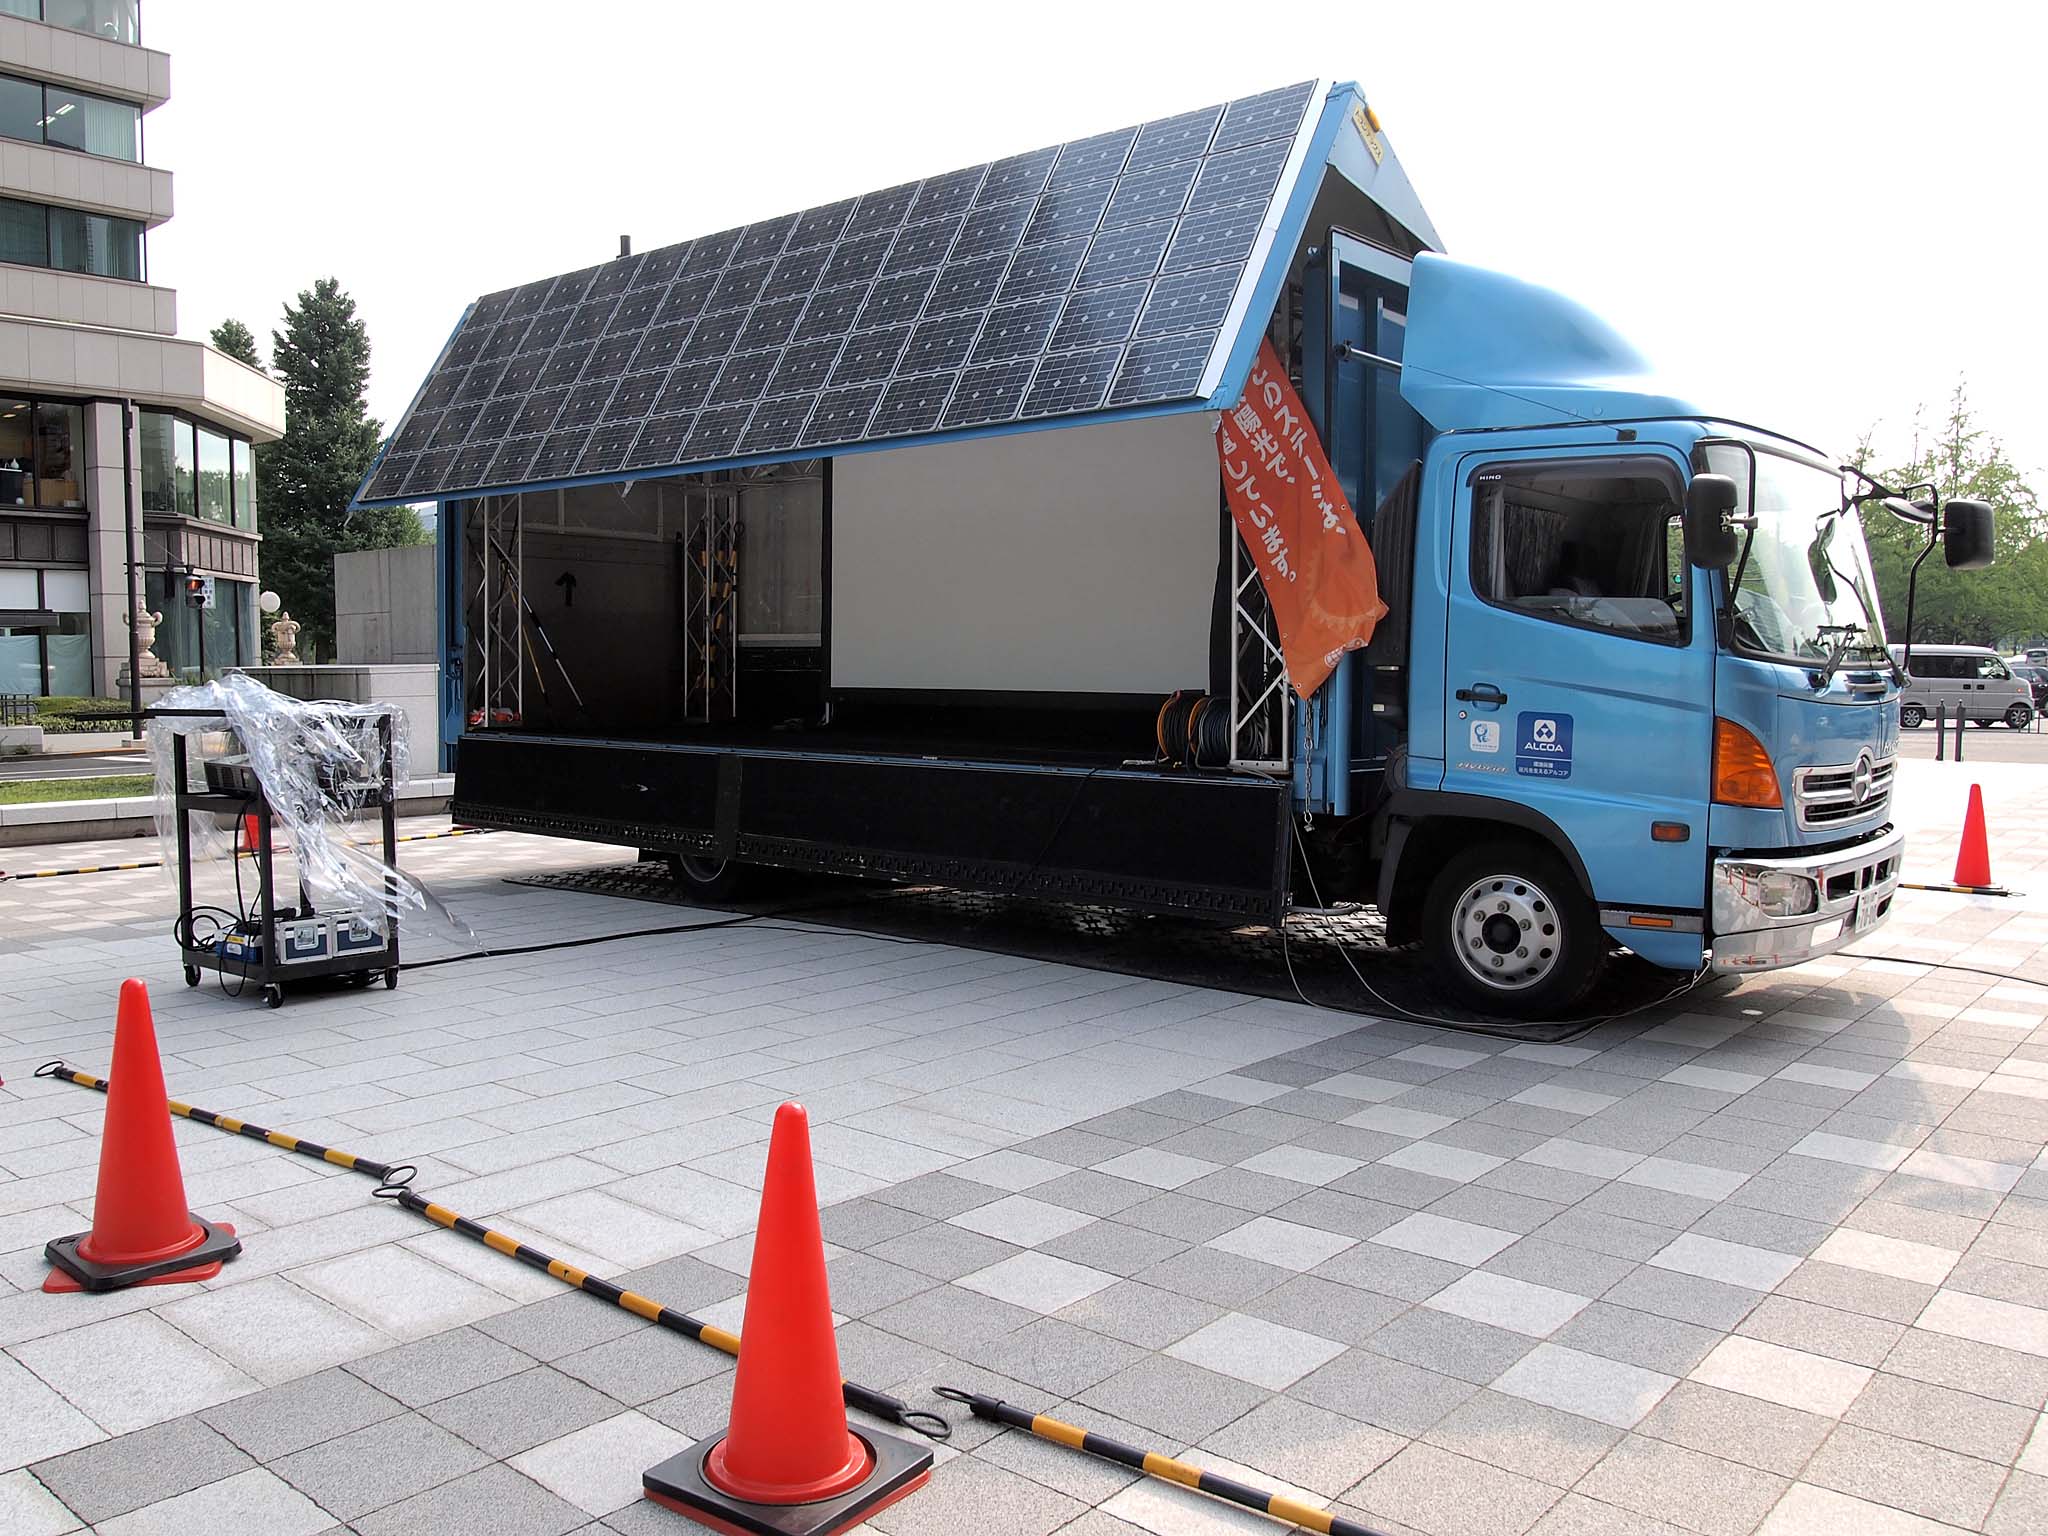 Solar Powered Food Trucks – Do Food Truck Solar Panels Work?